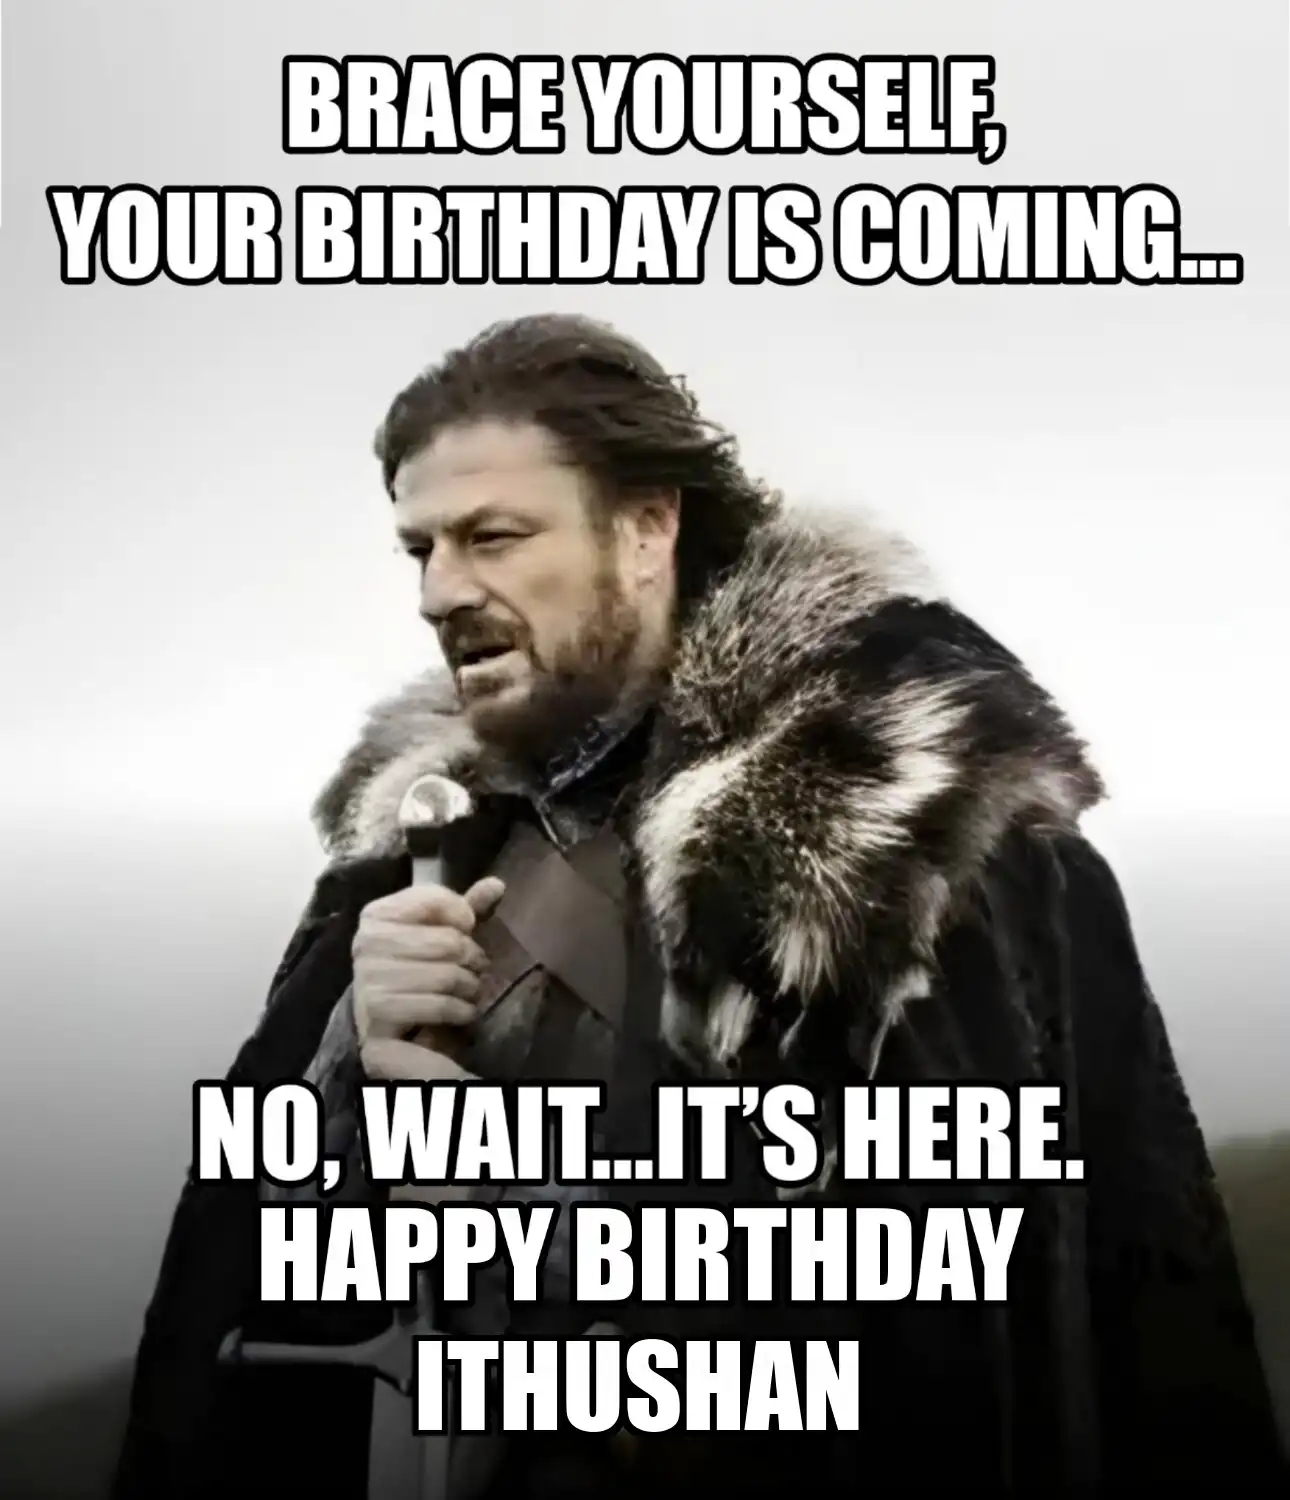 Happy Birthday Ithushan Brace Yourself Your Birthday Is Coming Meme